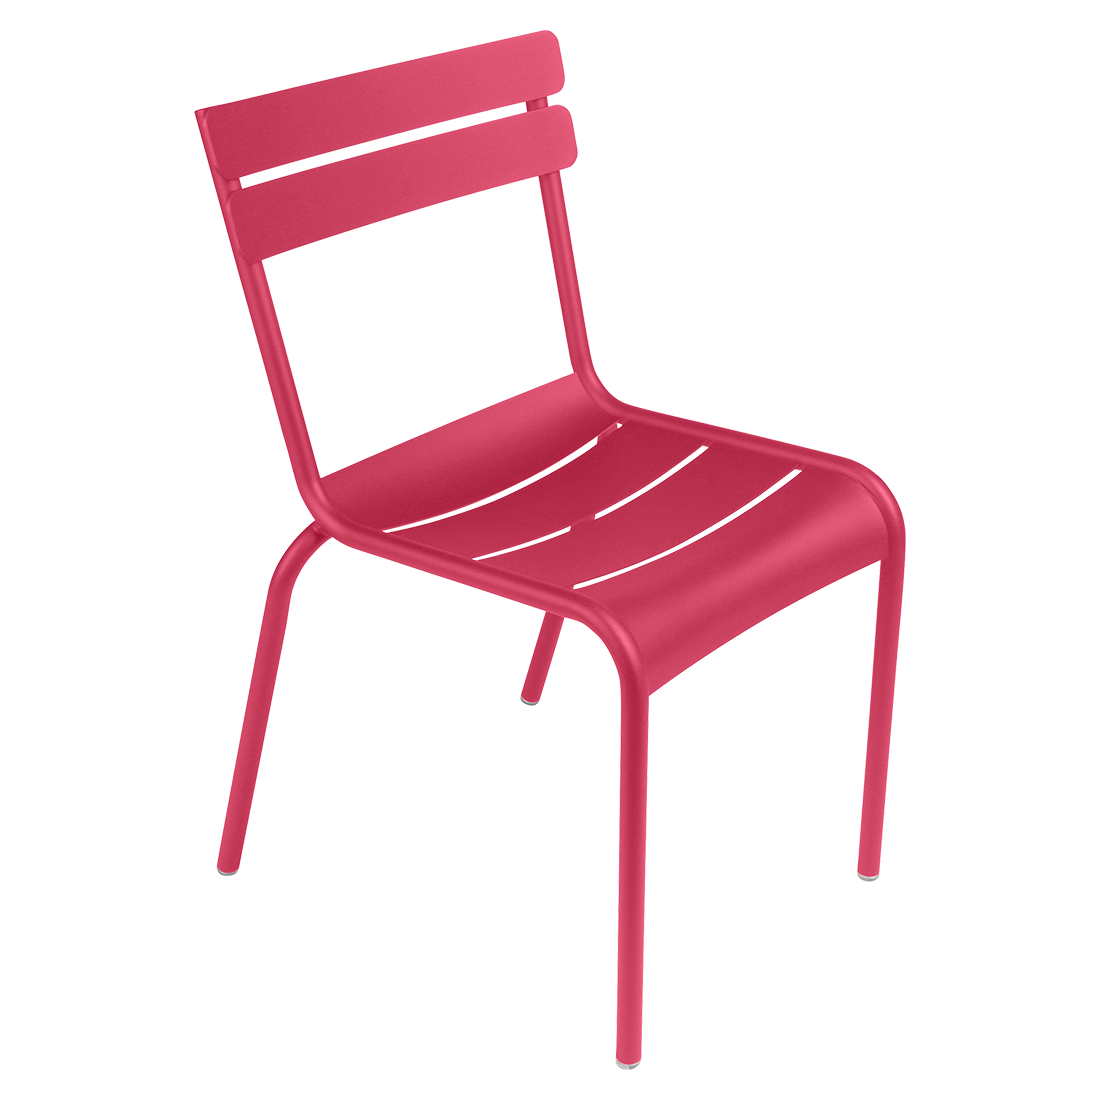 chaise de jardin, chaise metal, chaise fermob, chaise terrasse, chaise rose